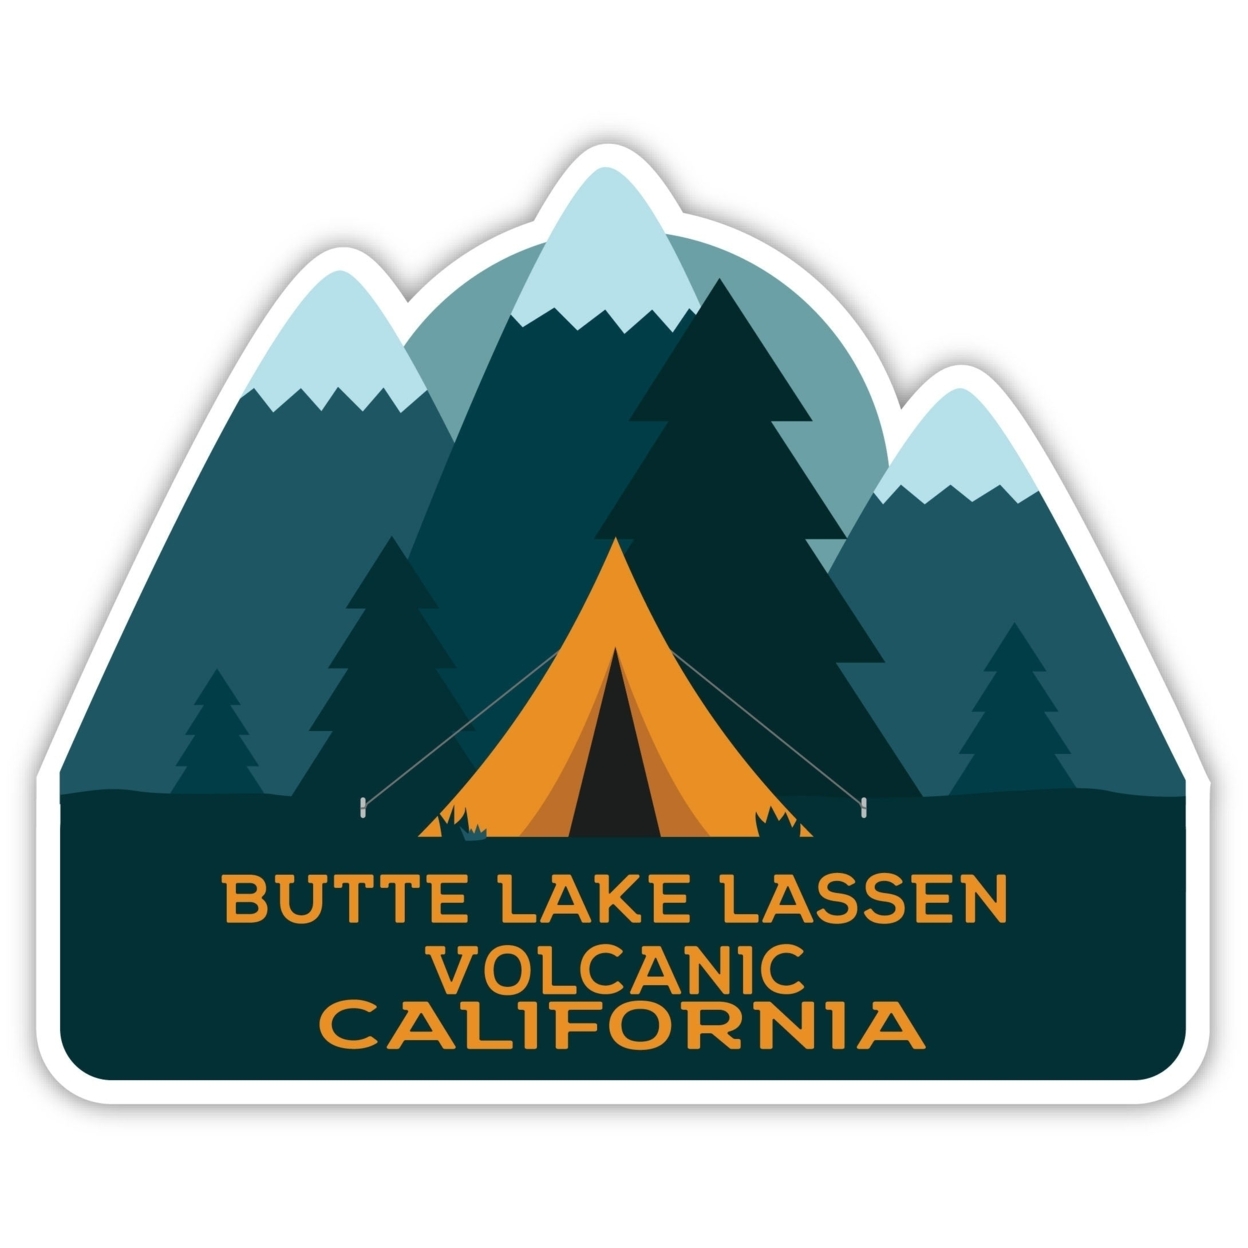 Butte Lake Lassen Volcanic California Souvenir Decorative Stickers (Choose Theme And Size) - Single Unit, 2-Inch, Tent